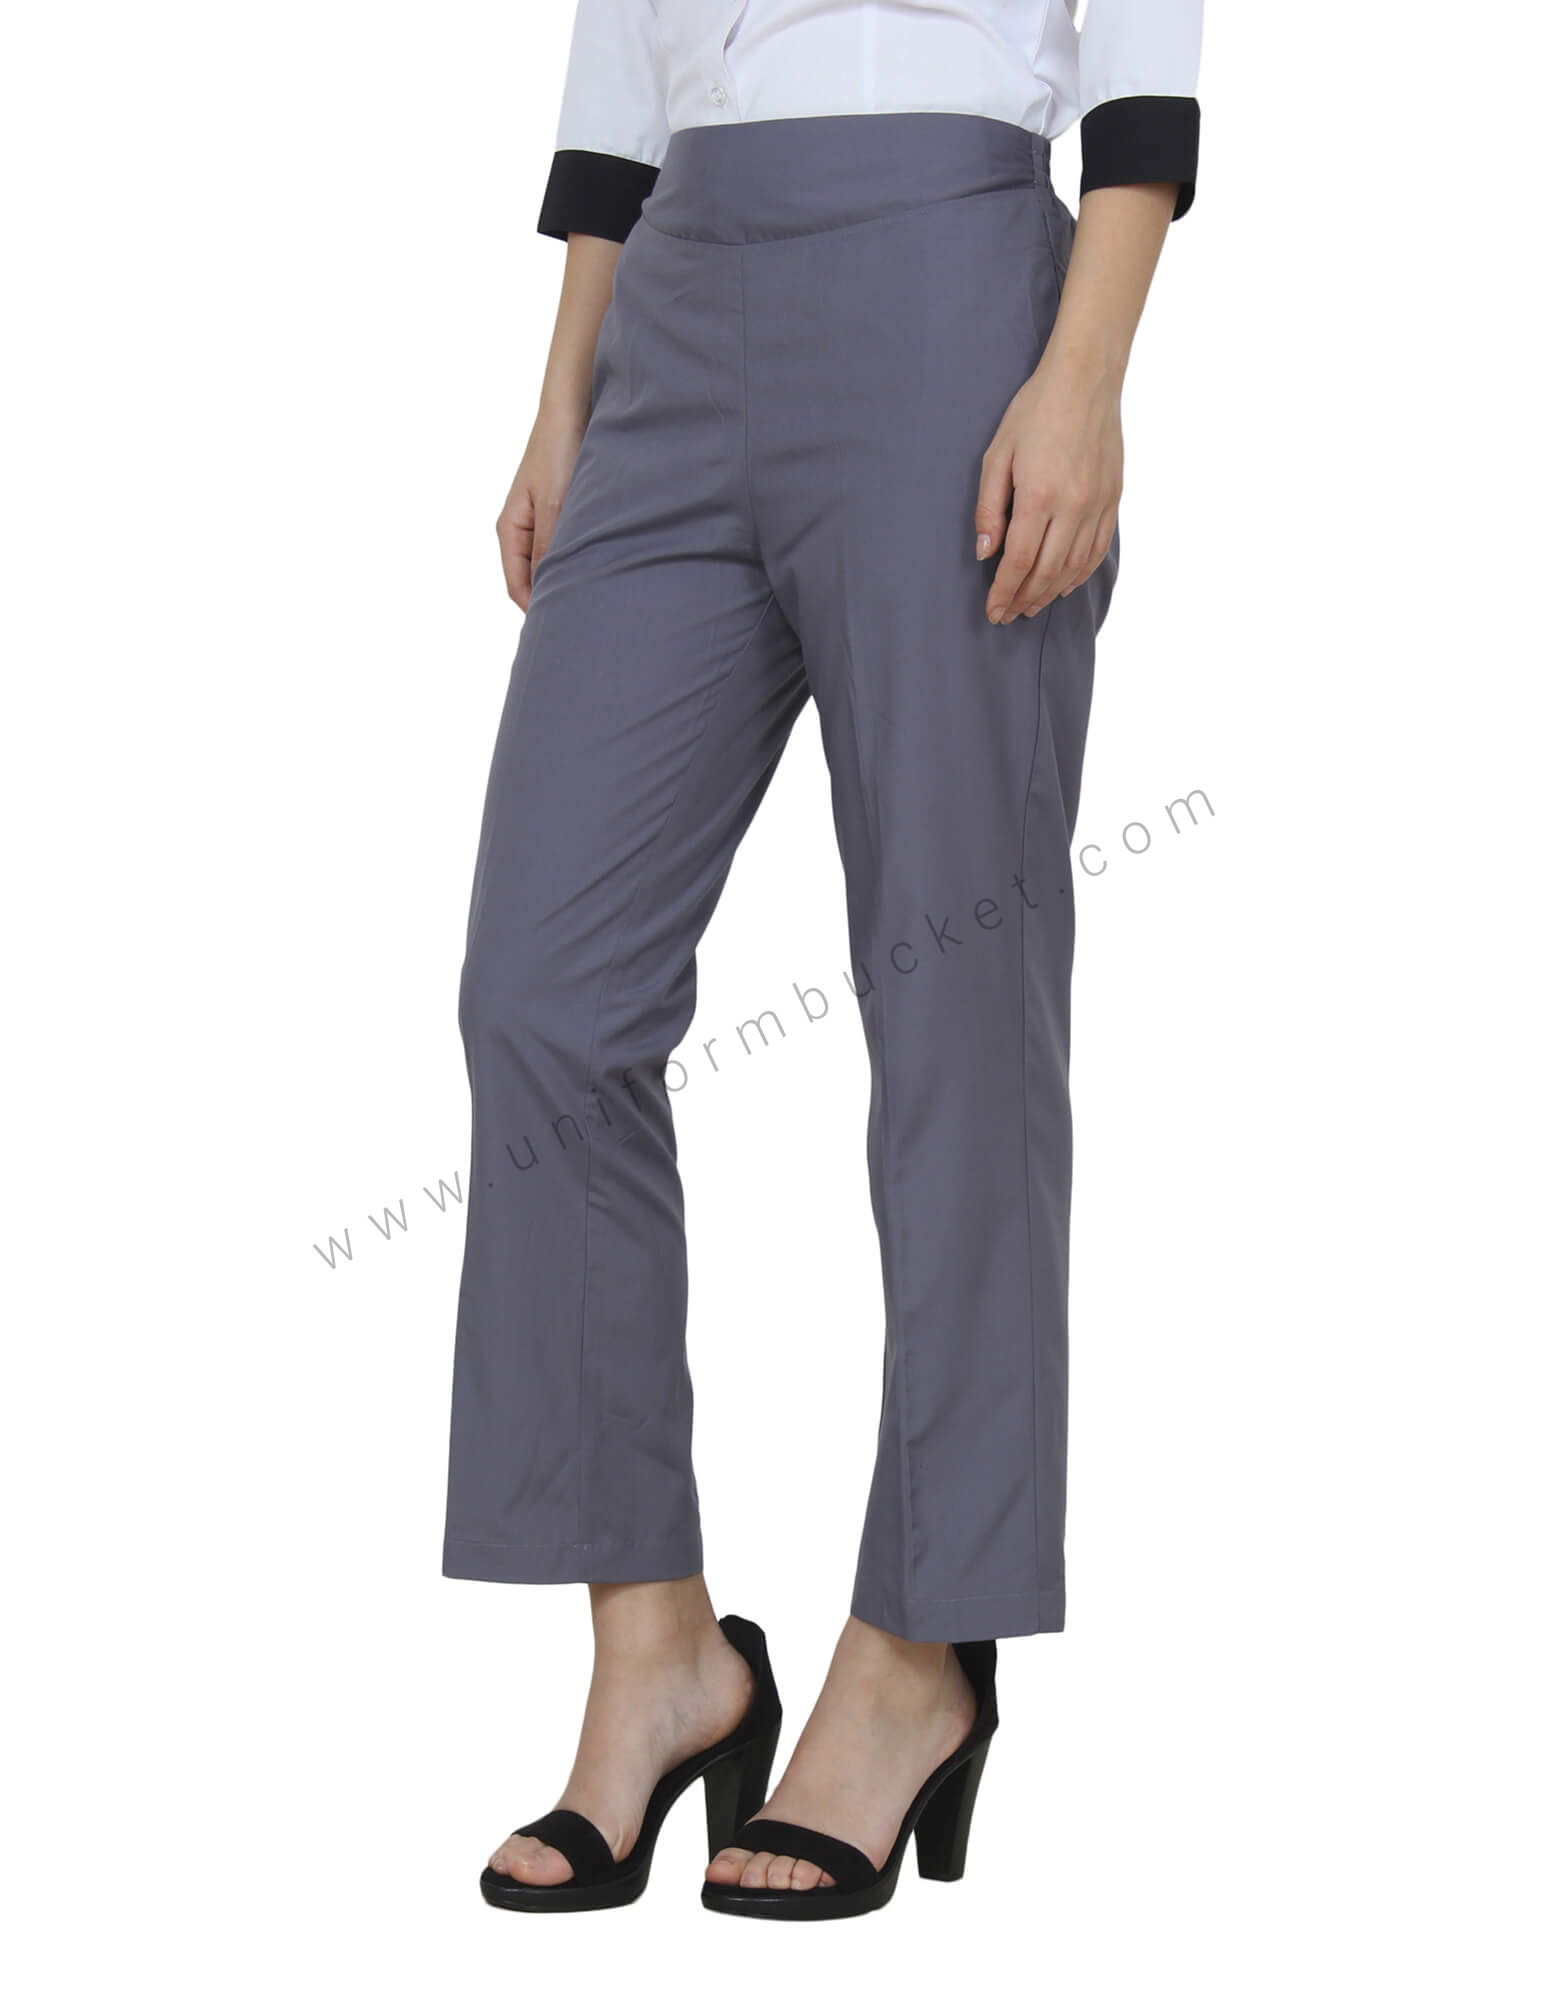 Formal Grey Trouser With Broad Elastic Belt